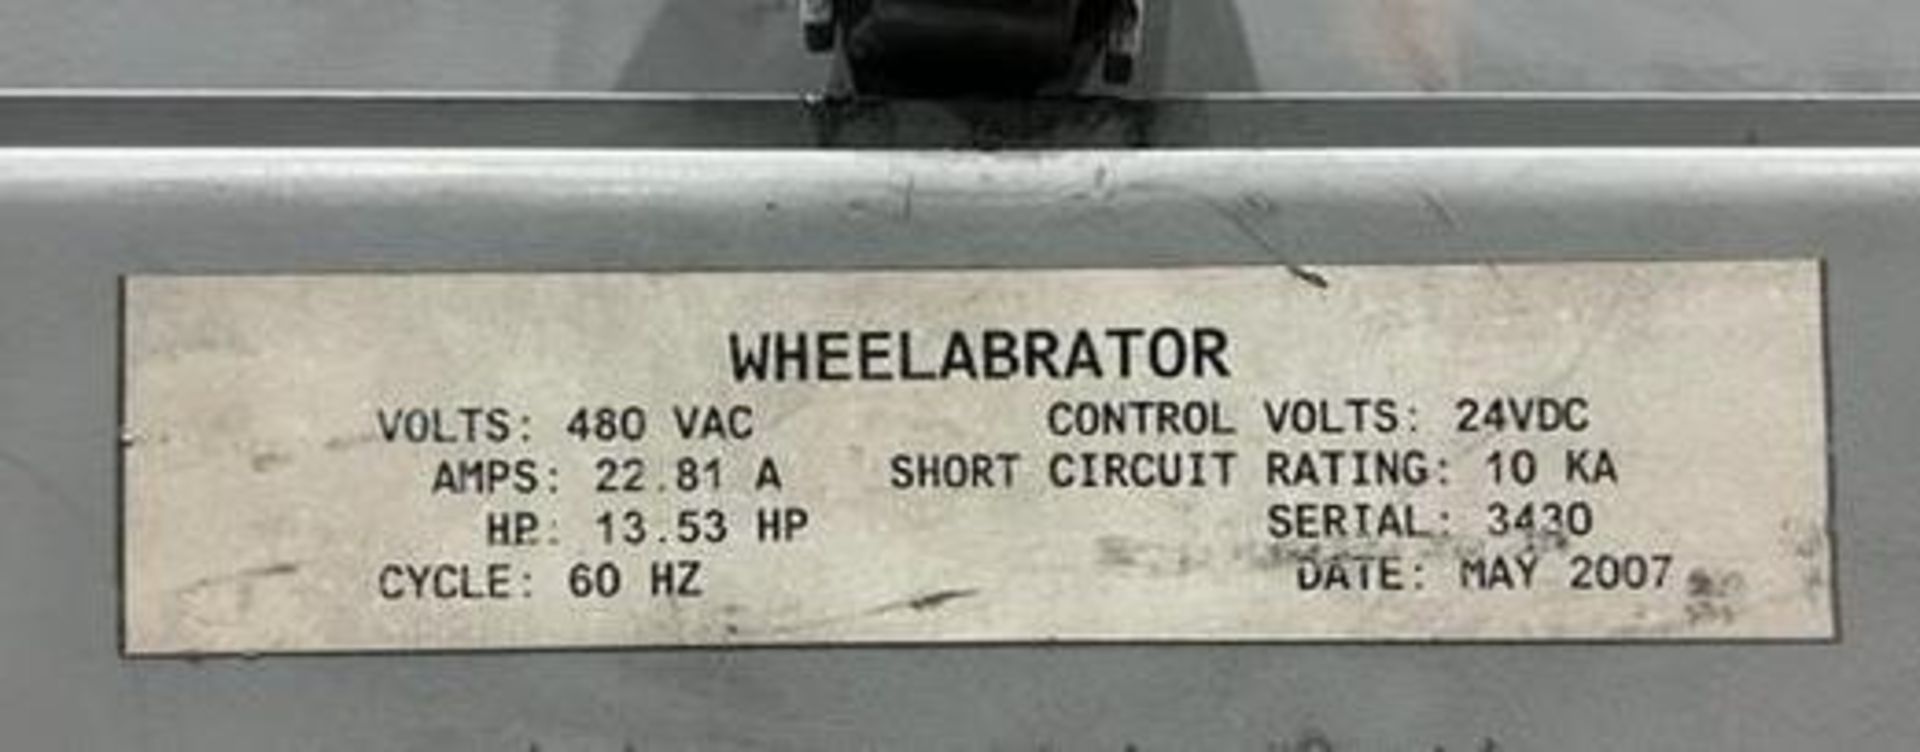 Wheelabrator Machine, Mfg'd 2007 - Image 6 of 11